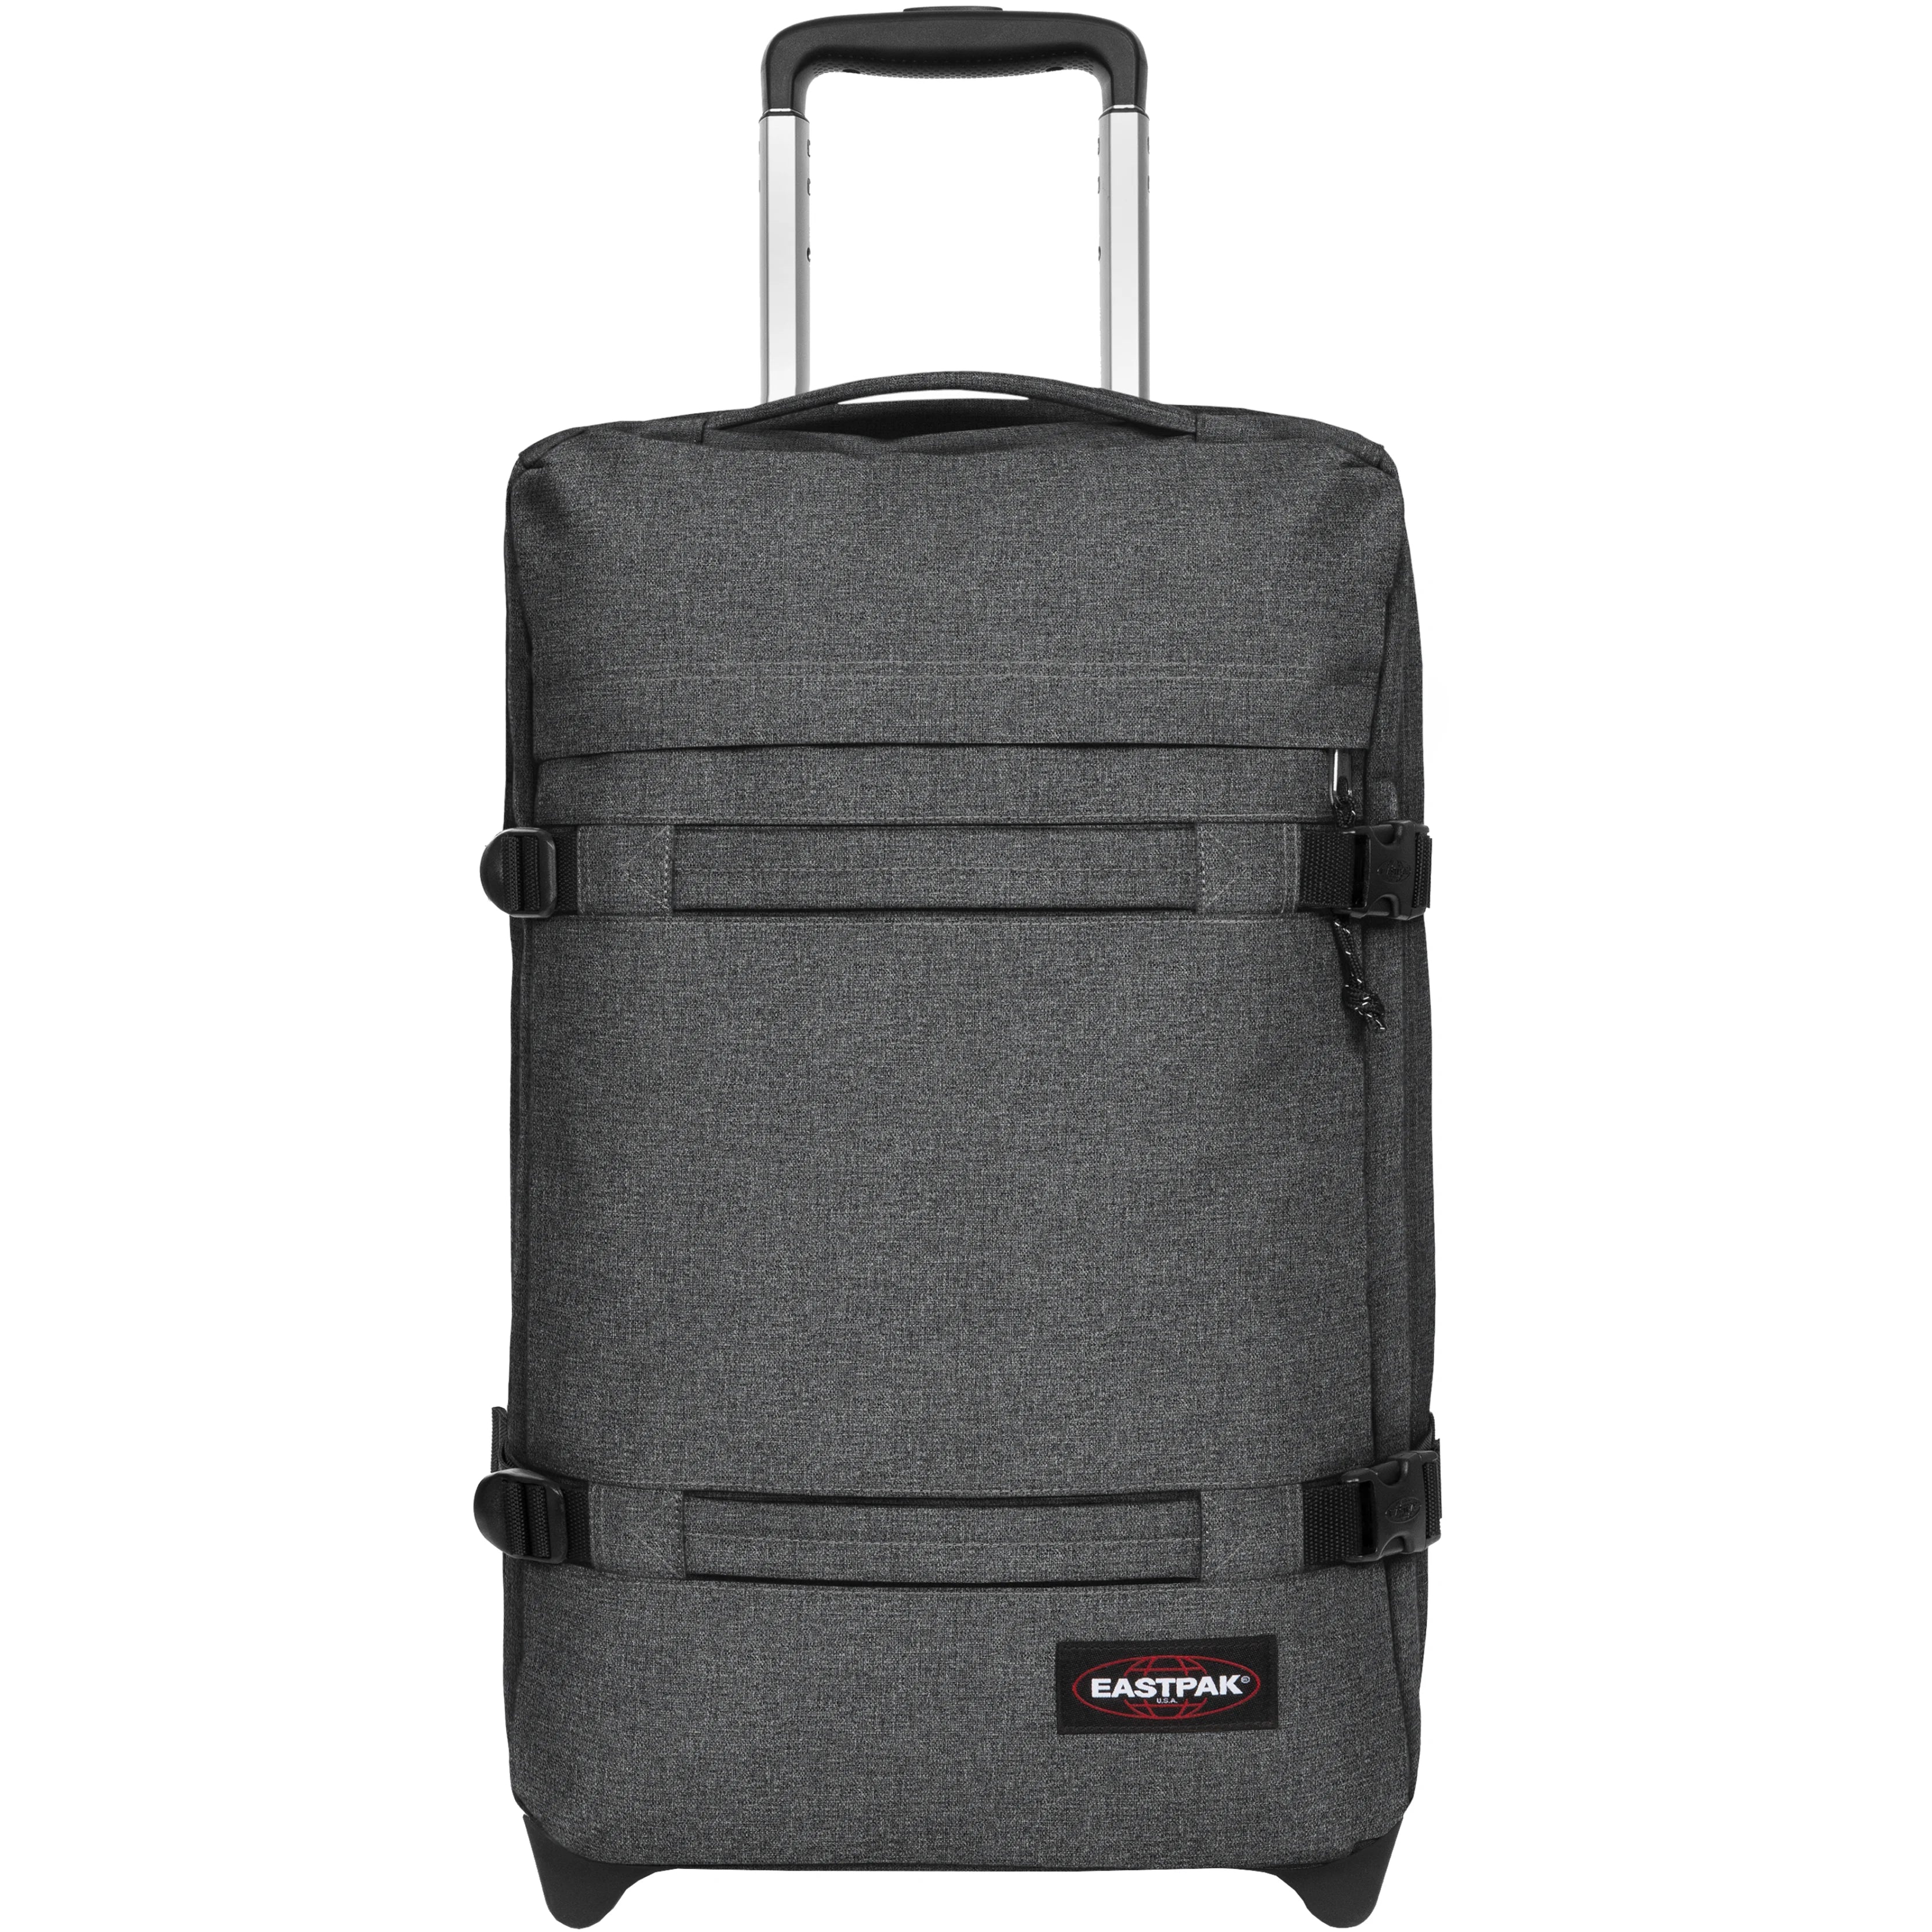 Eastpak Authentic Travel Transit'r S Rolling Travel Bag 51 cm - Black Denim